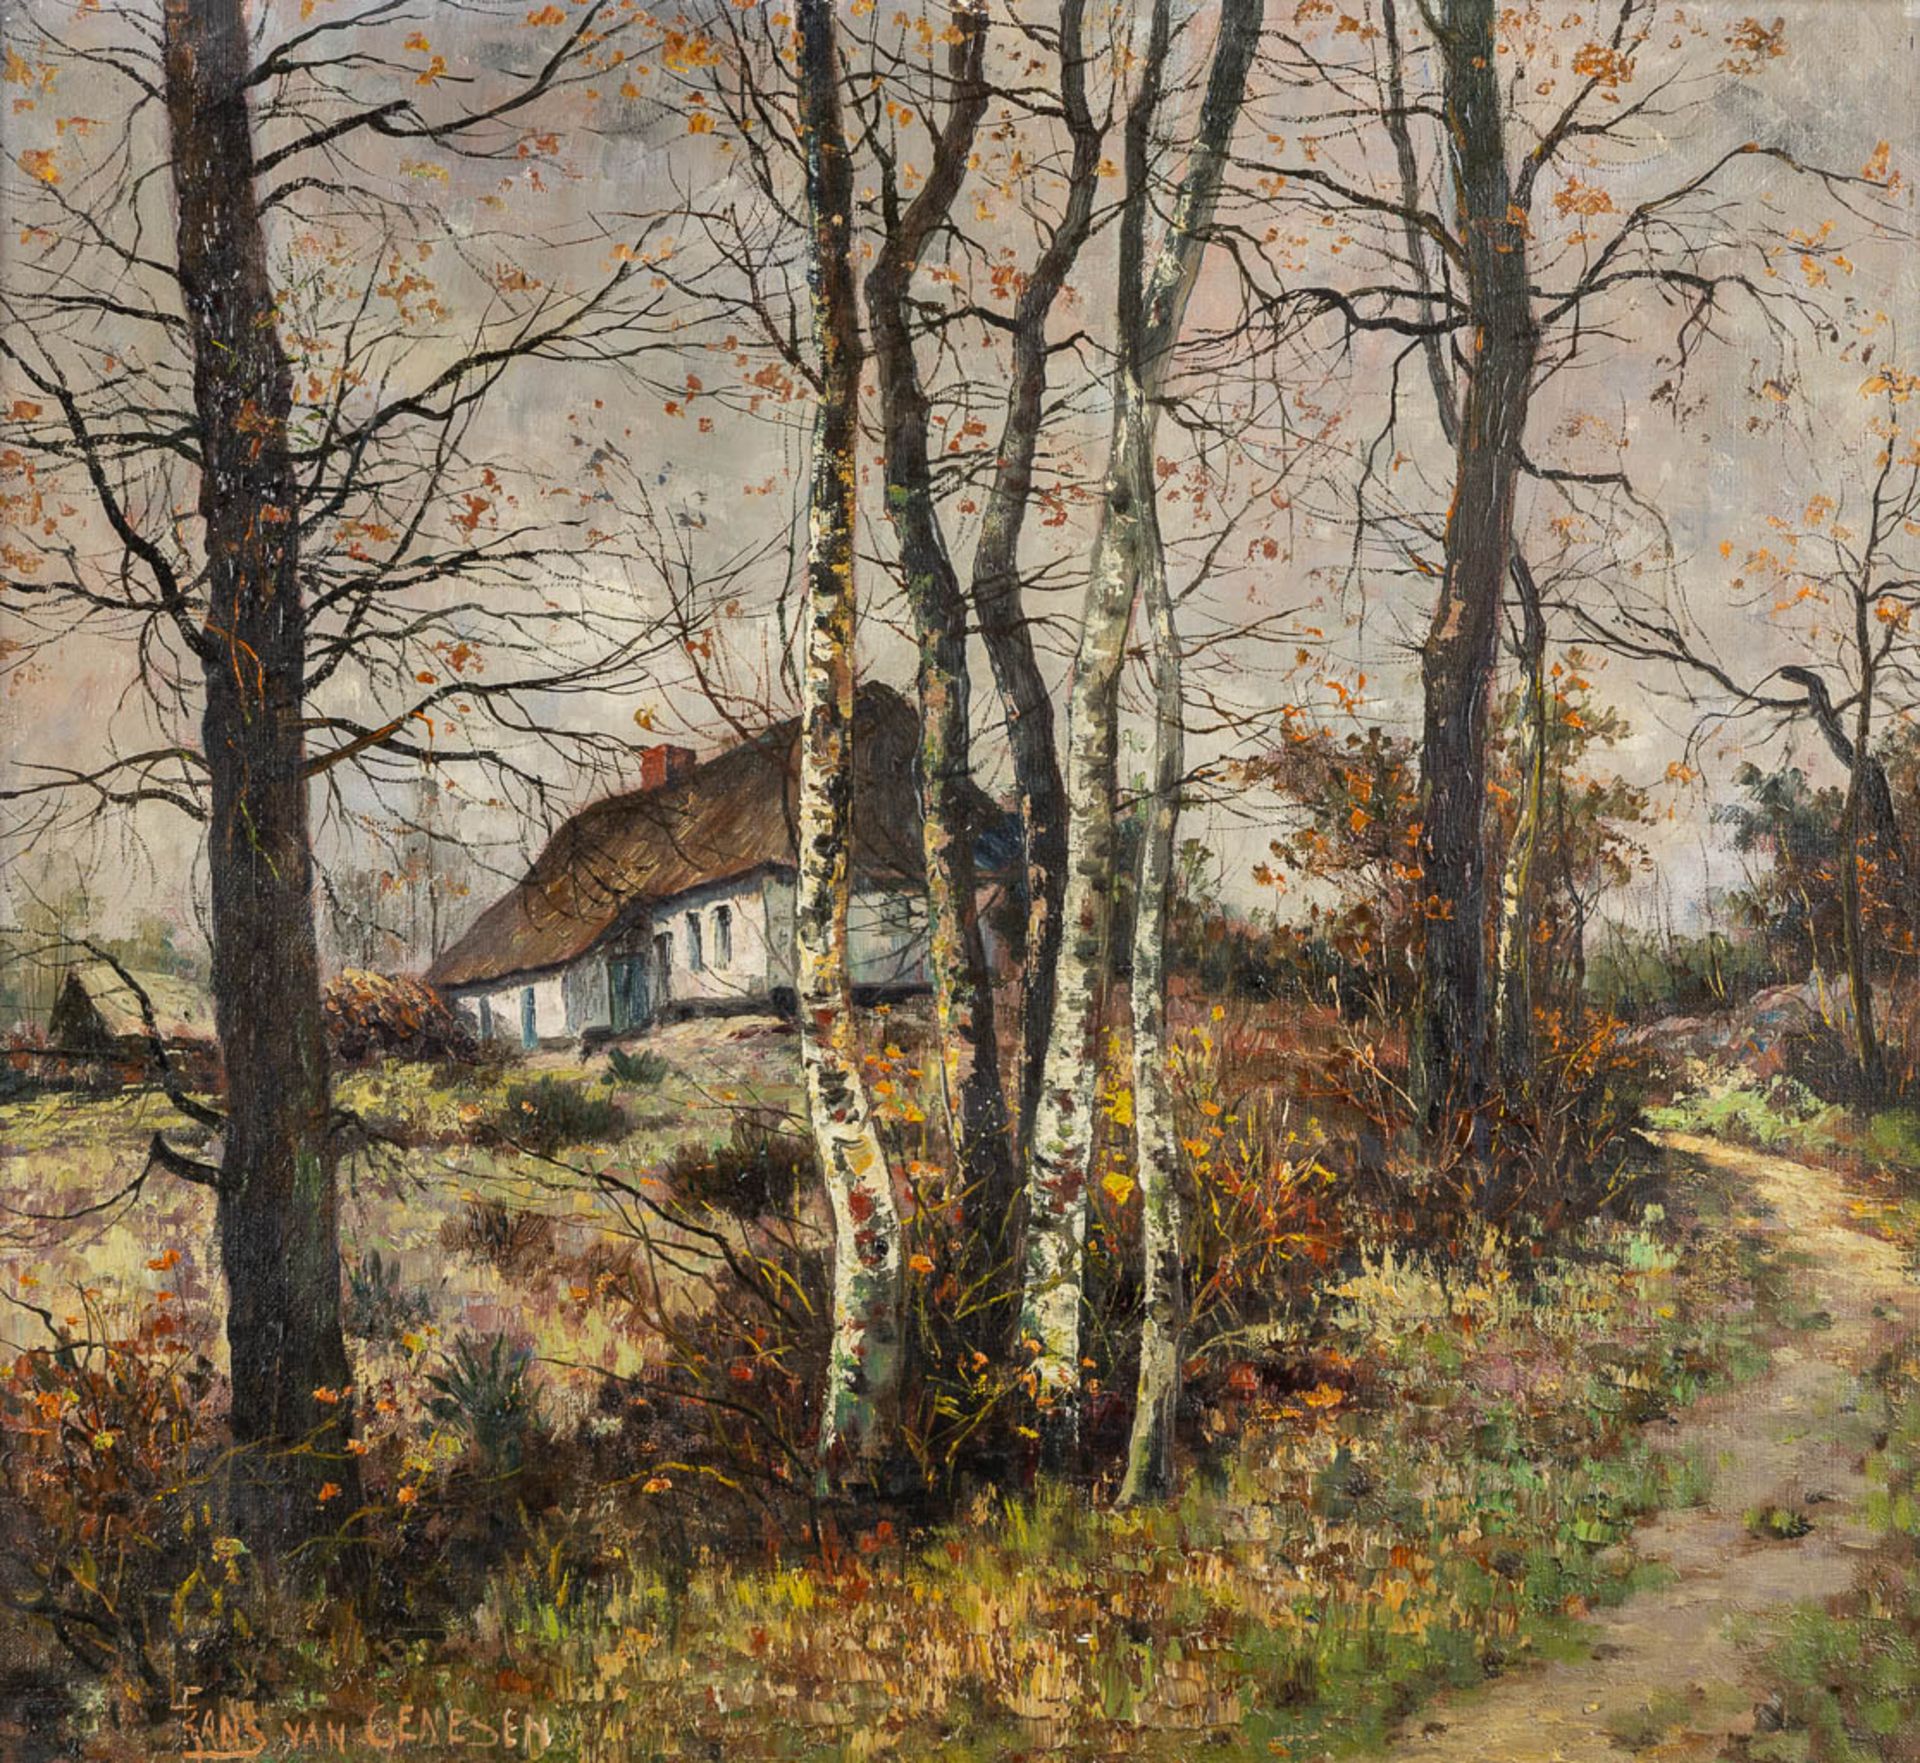 Franz VAN GENESEN (1887-1945) 'View on a farmhouse' oil on canvas. (W:60 x H:55 cm)